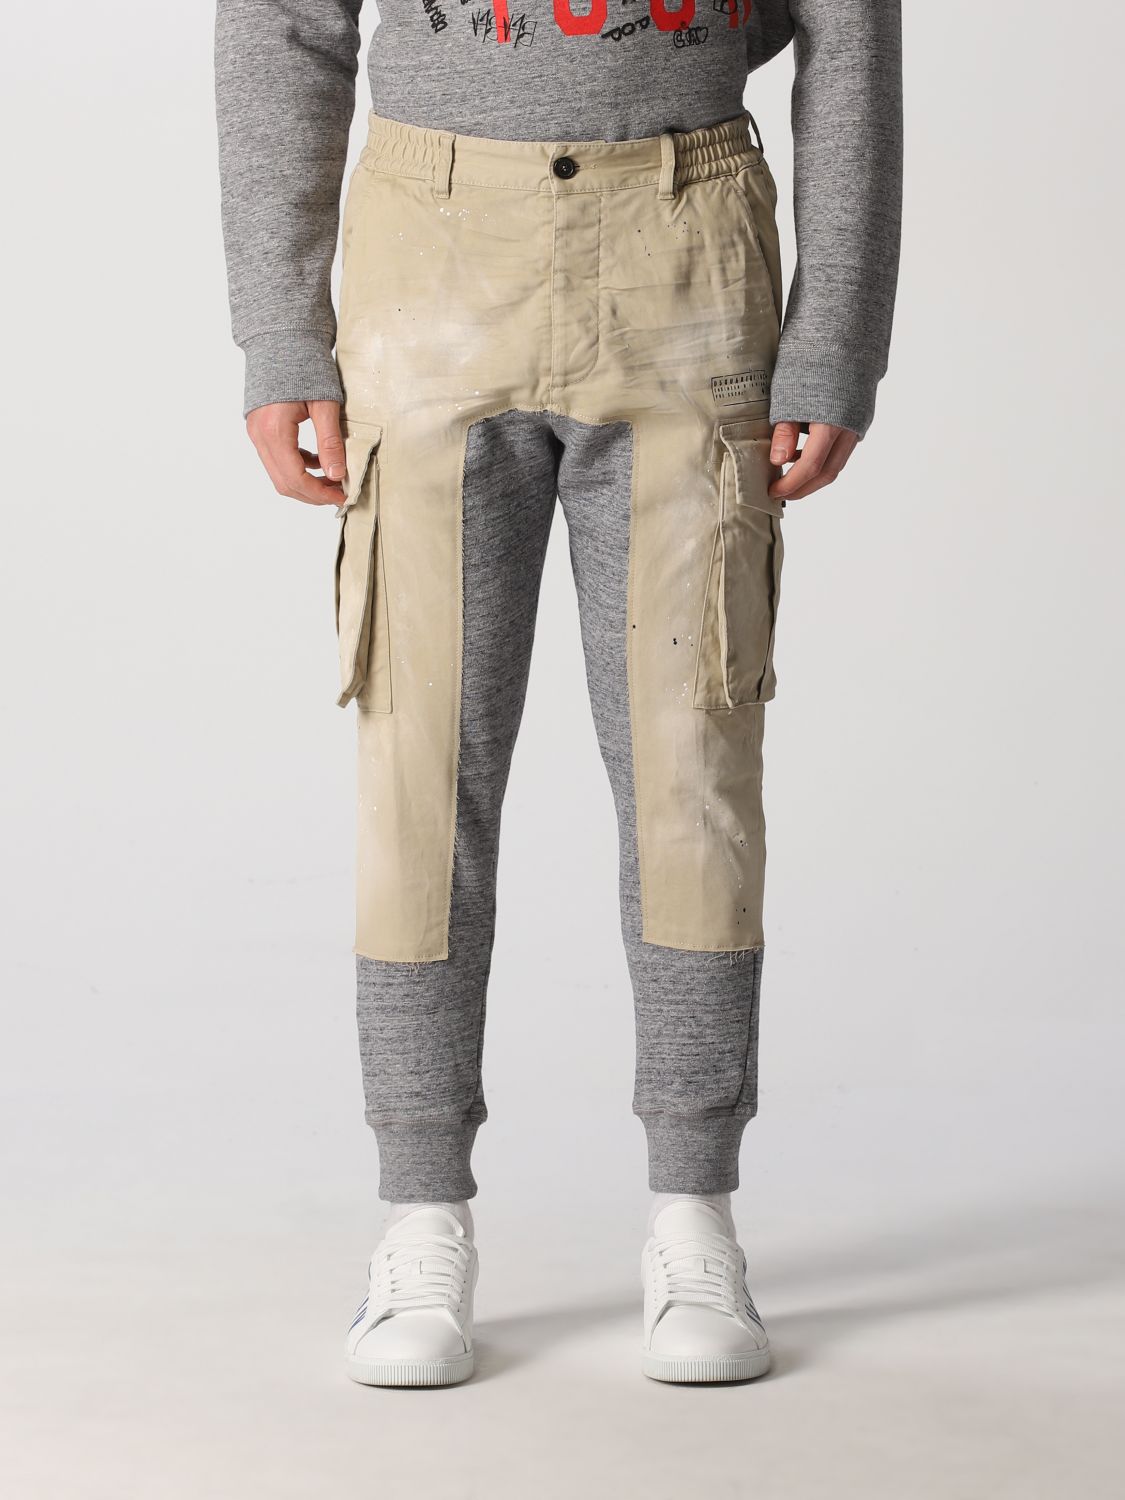 Giglio.com Uomo Abbigliamento Pantaloni e jeans Pantaloni Pantaloni stretch Pantalone in cotone stretch 